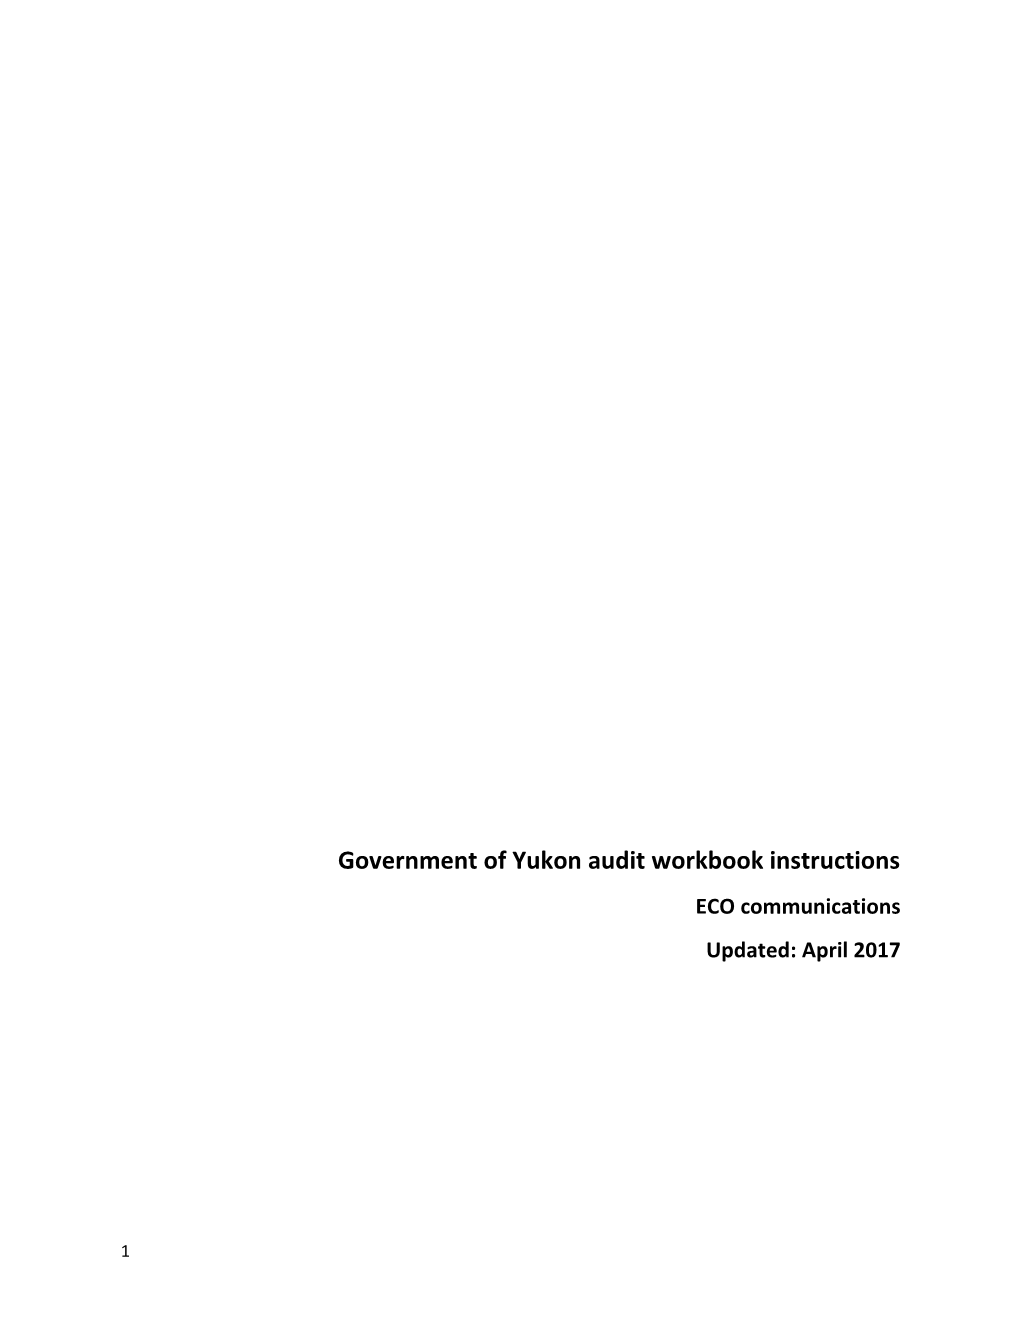 Government of Yukon Audit Workbook Instructions